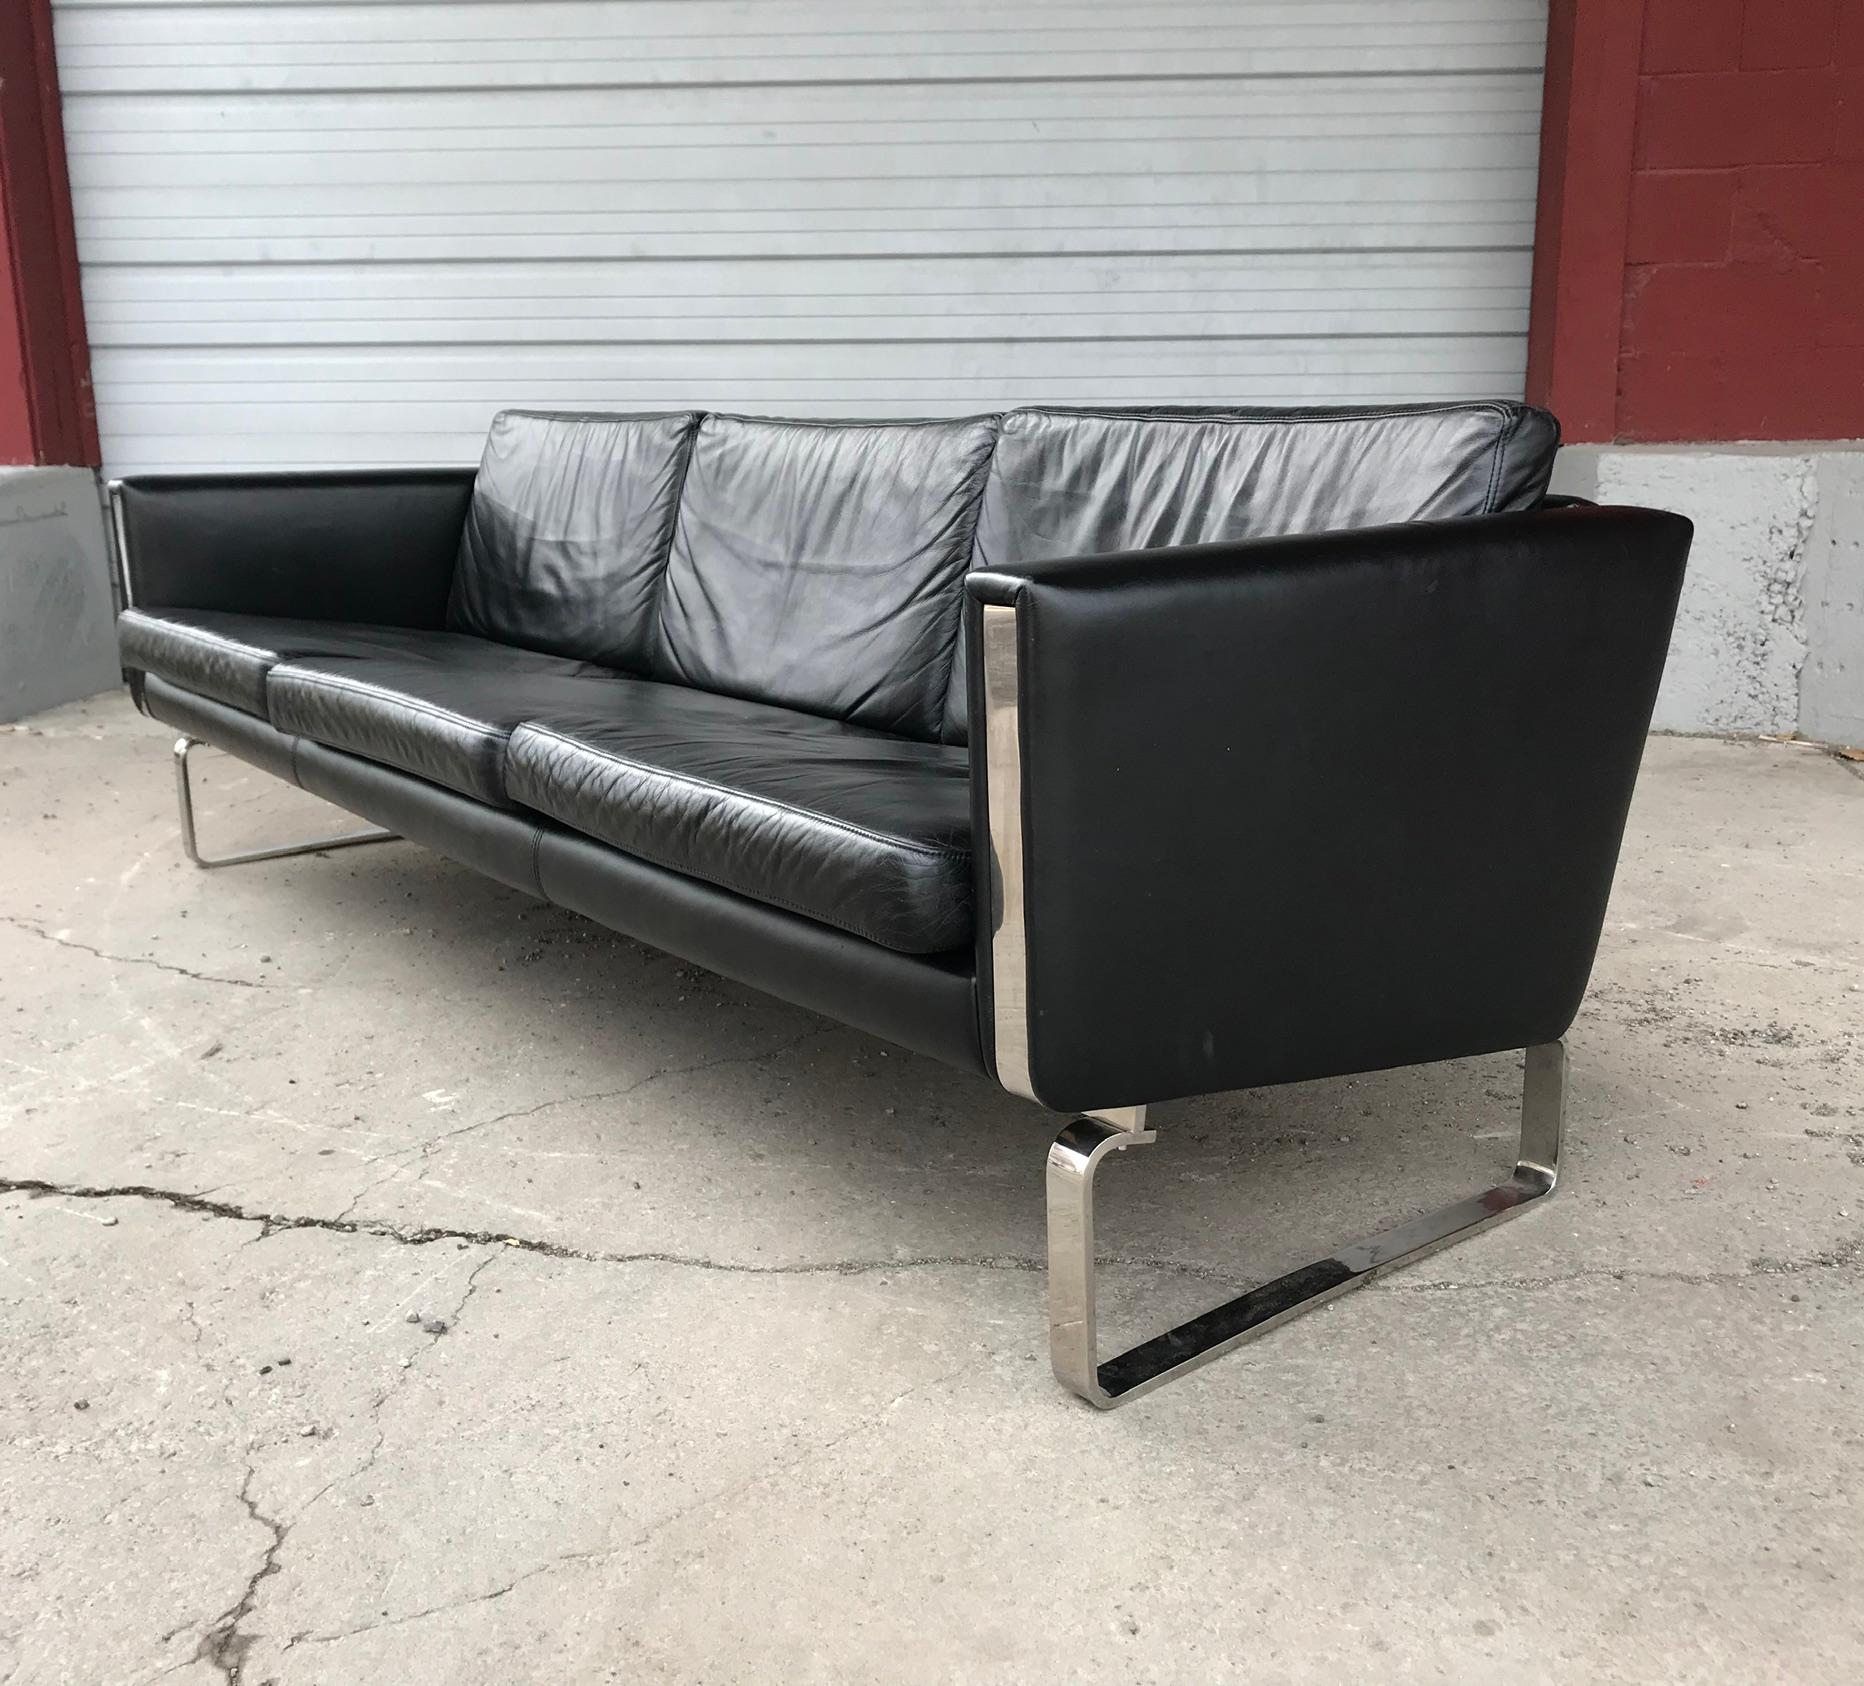 Ch103 3-Sitz-Sofa Design Hans Wegner, 1970, schwarzes Leder und verchromter Stahl (Ende des 20. Jahrhunderts)